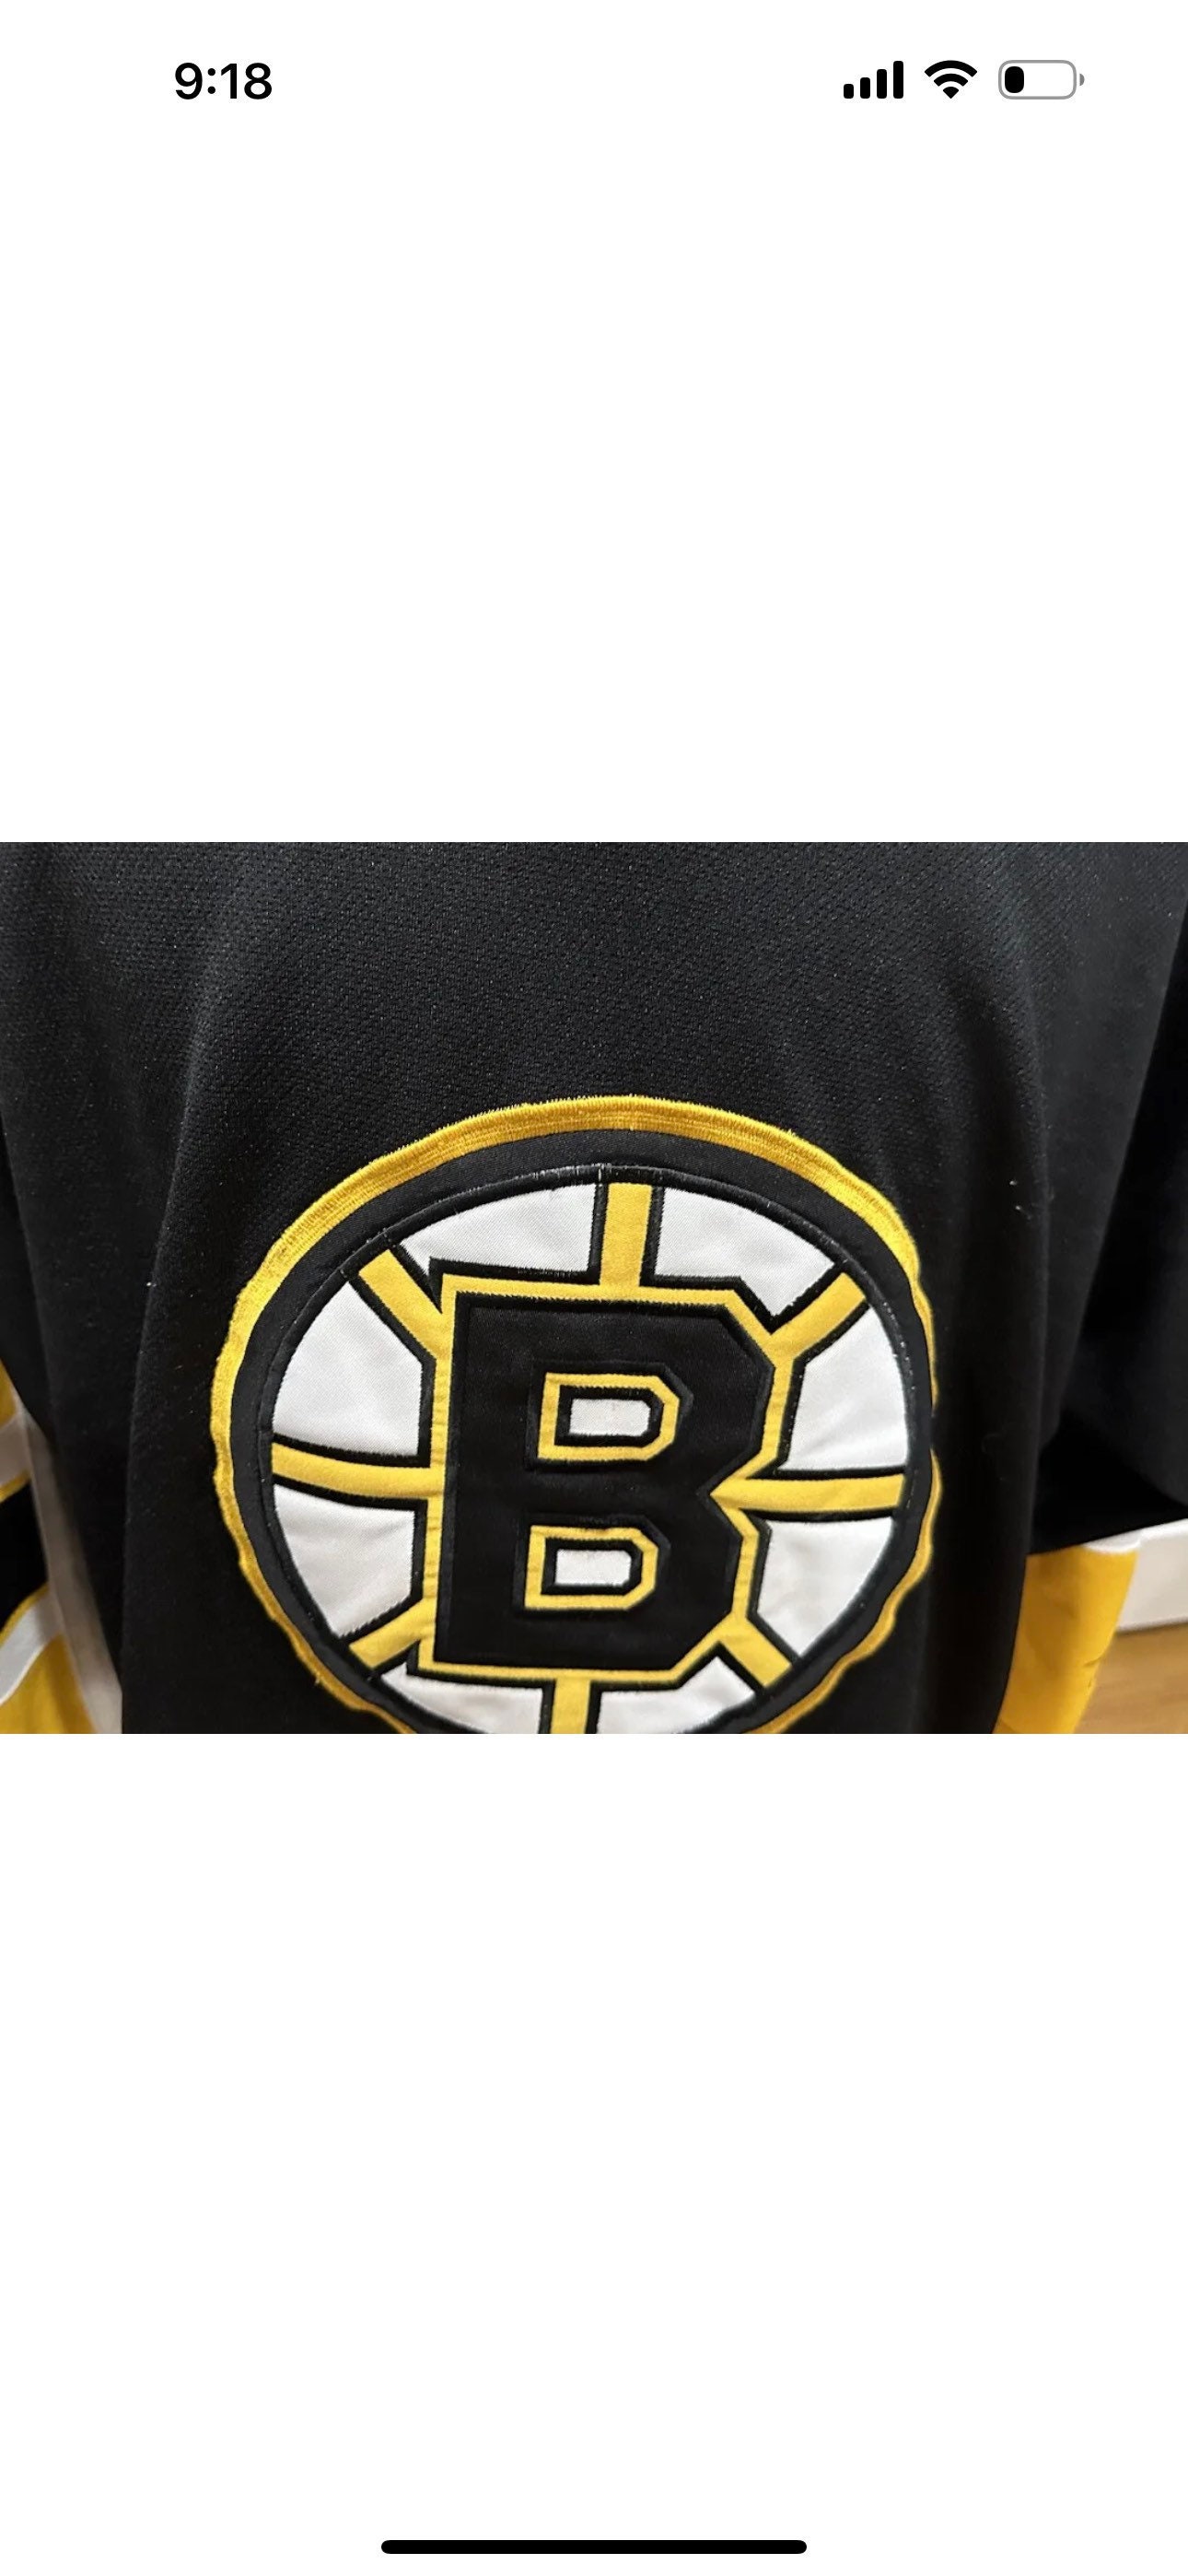 RARE Vtg 90s NHL Pro Player Boston Bruins Jersey Mens XL Hockey Sewn  Stitched